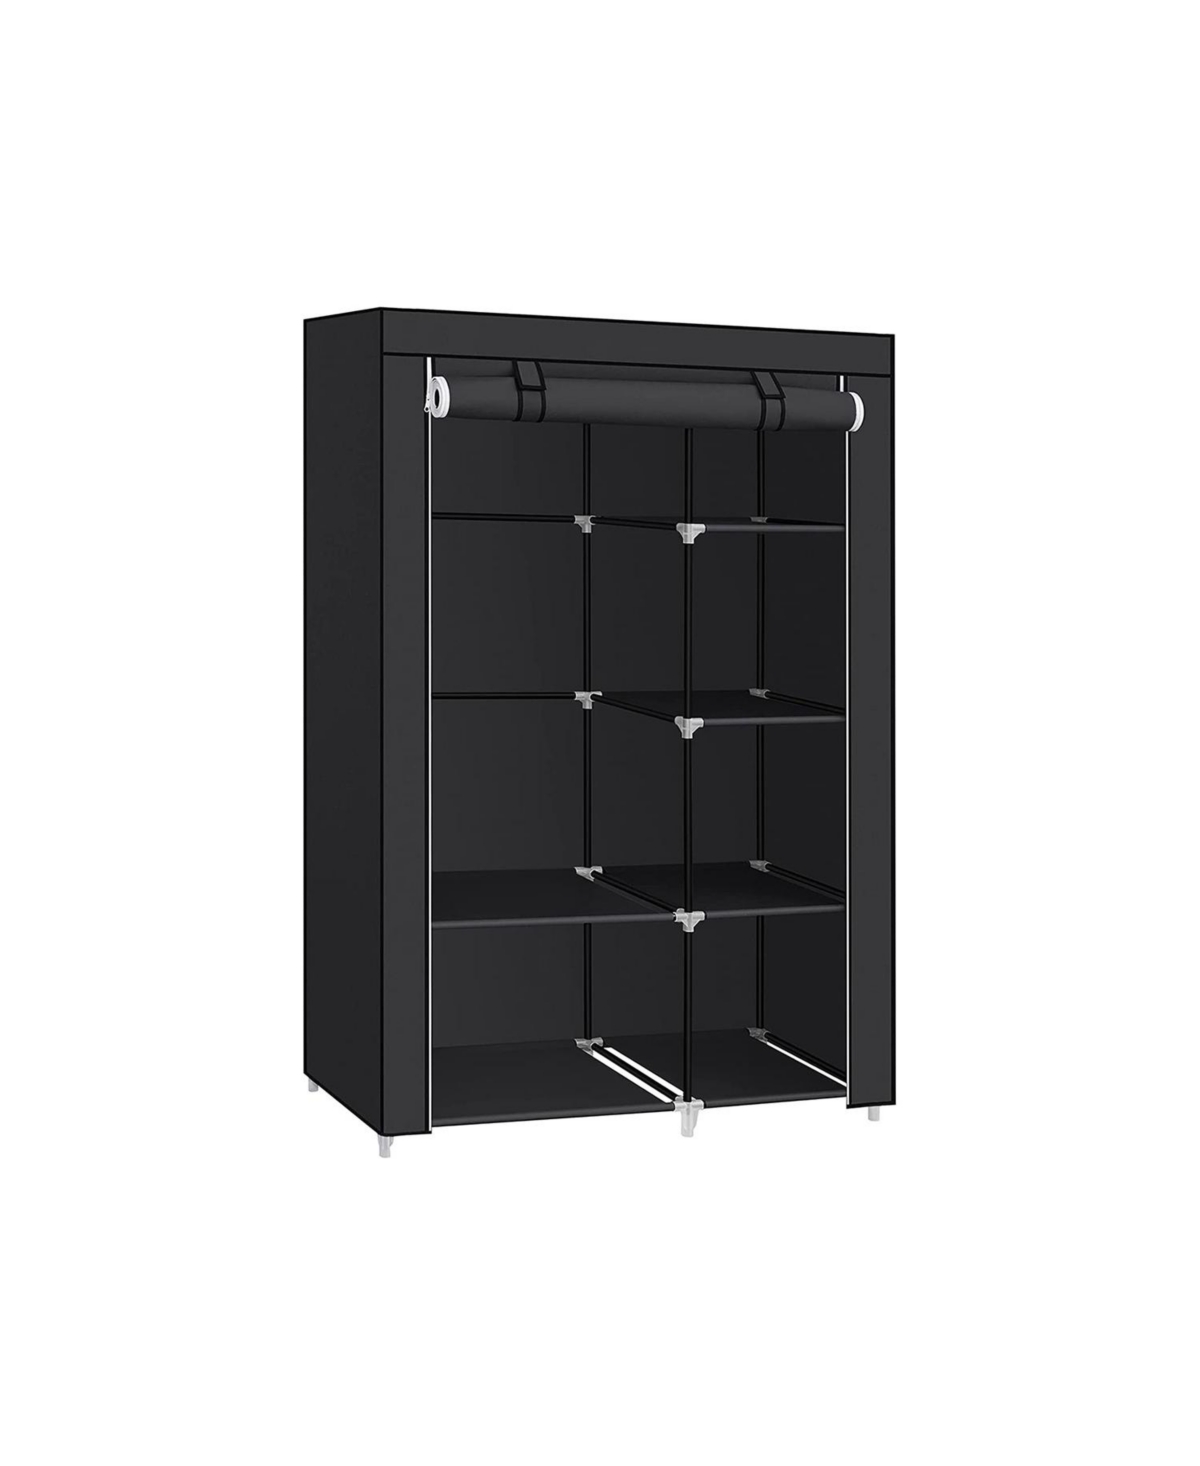 Portable Closet, Clothes Storage Organizer with 6 Shelves, 1 Clothes Hanging Rail - Black